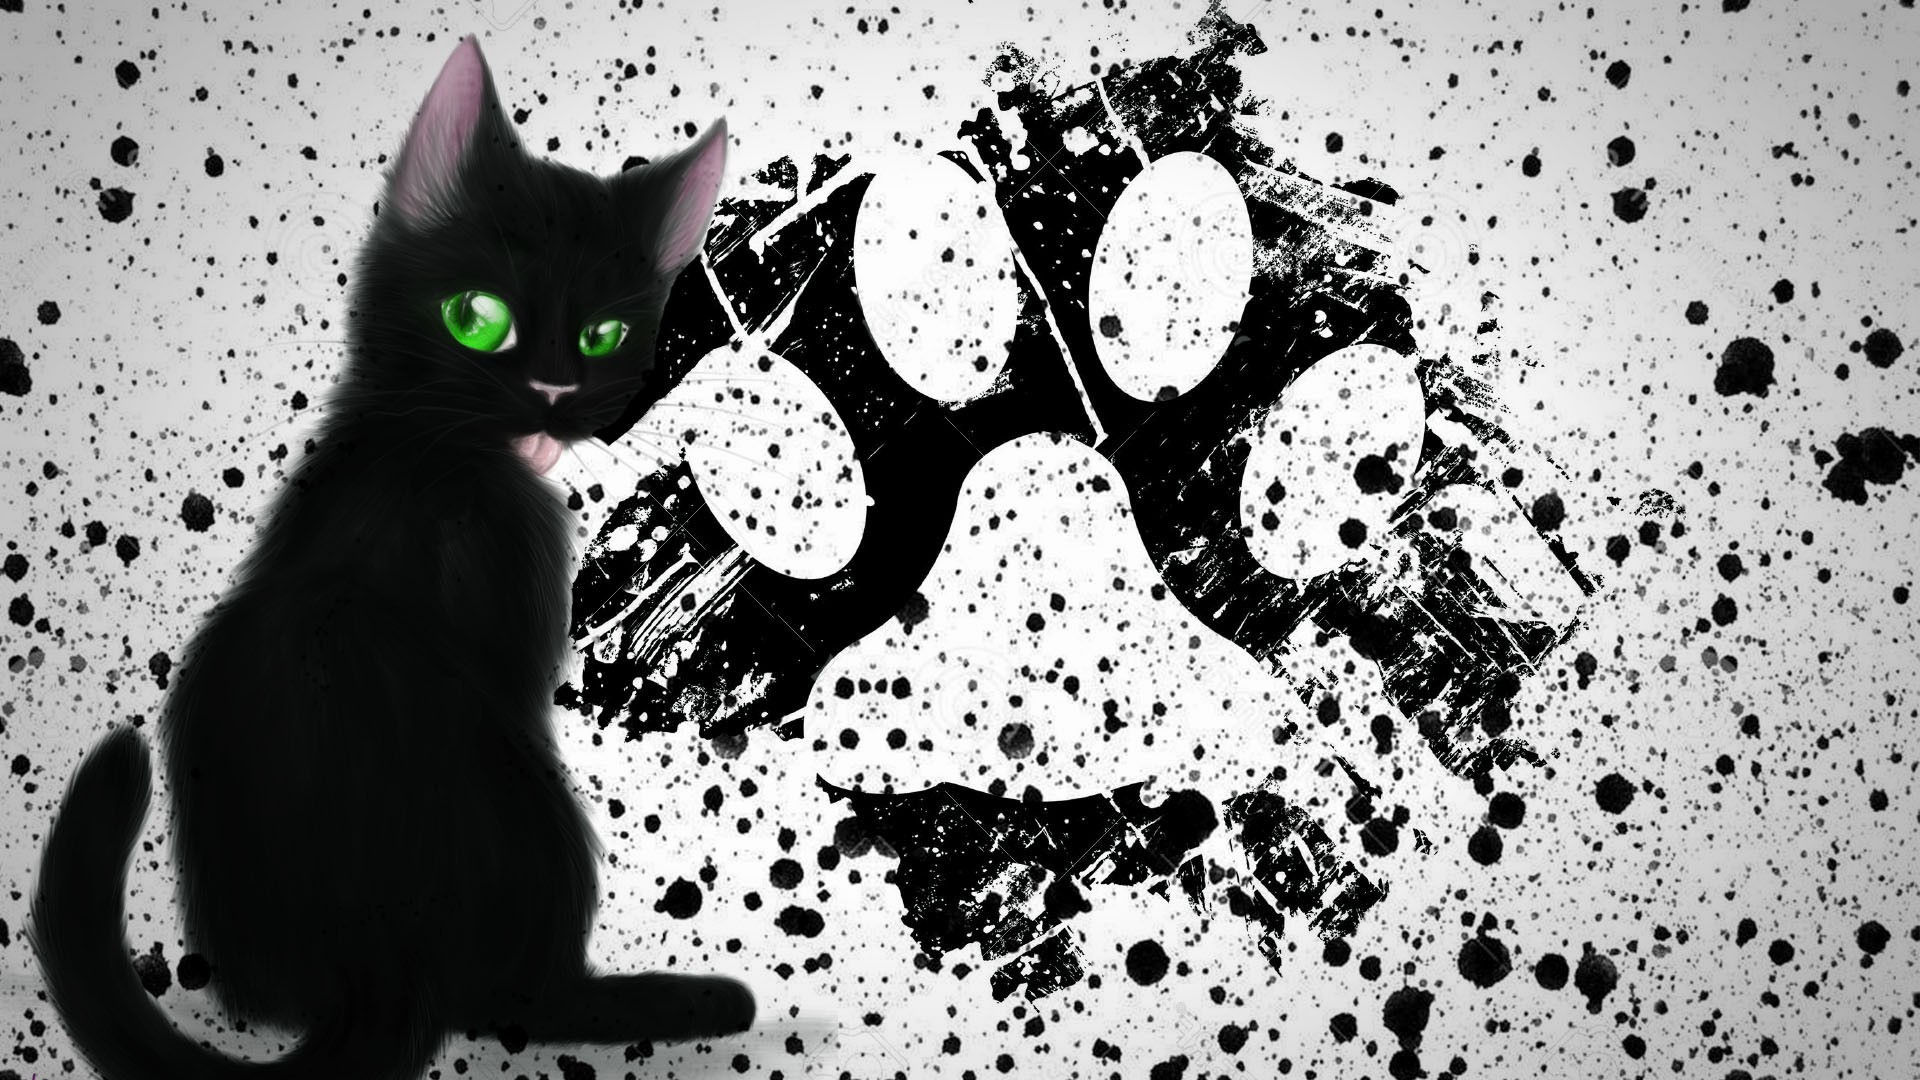 painting paws cat black cats kittens paint splatter Wallpaper